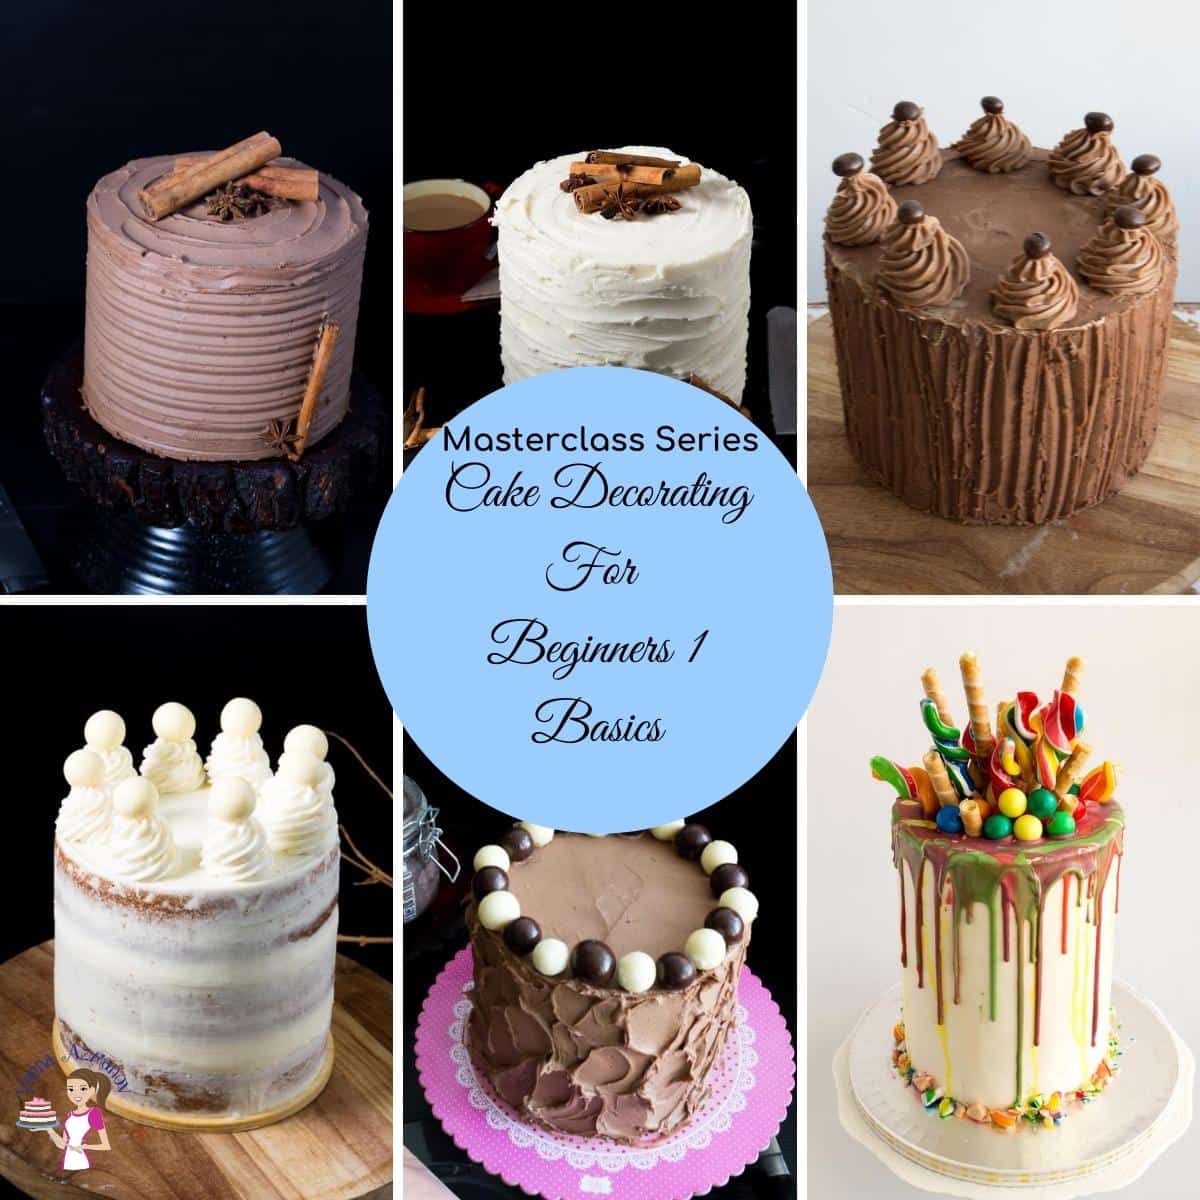 Cake Decorating for Beginners - Masterclass - Veena Azmanov